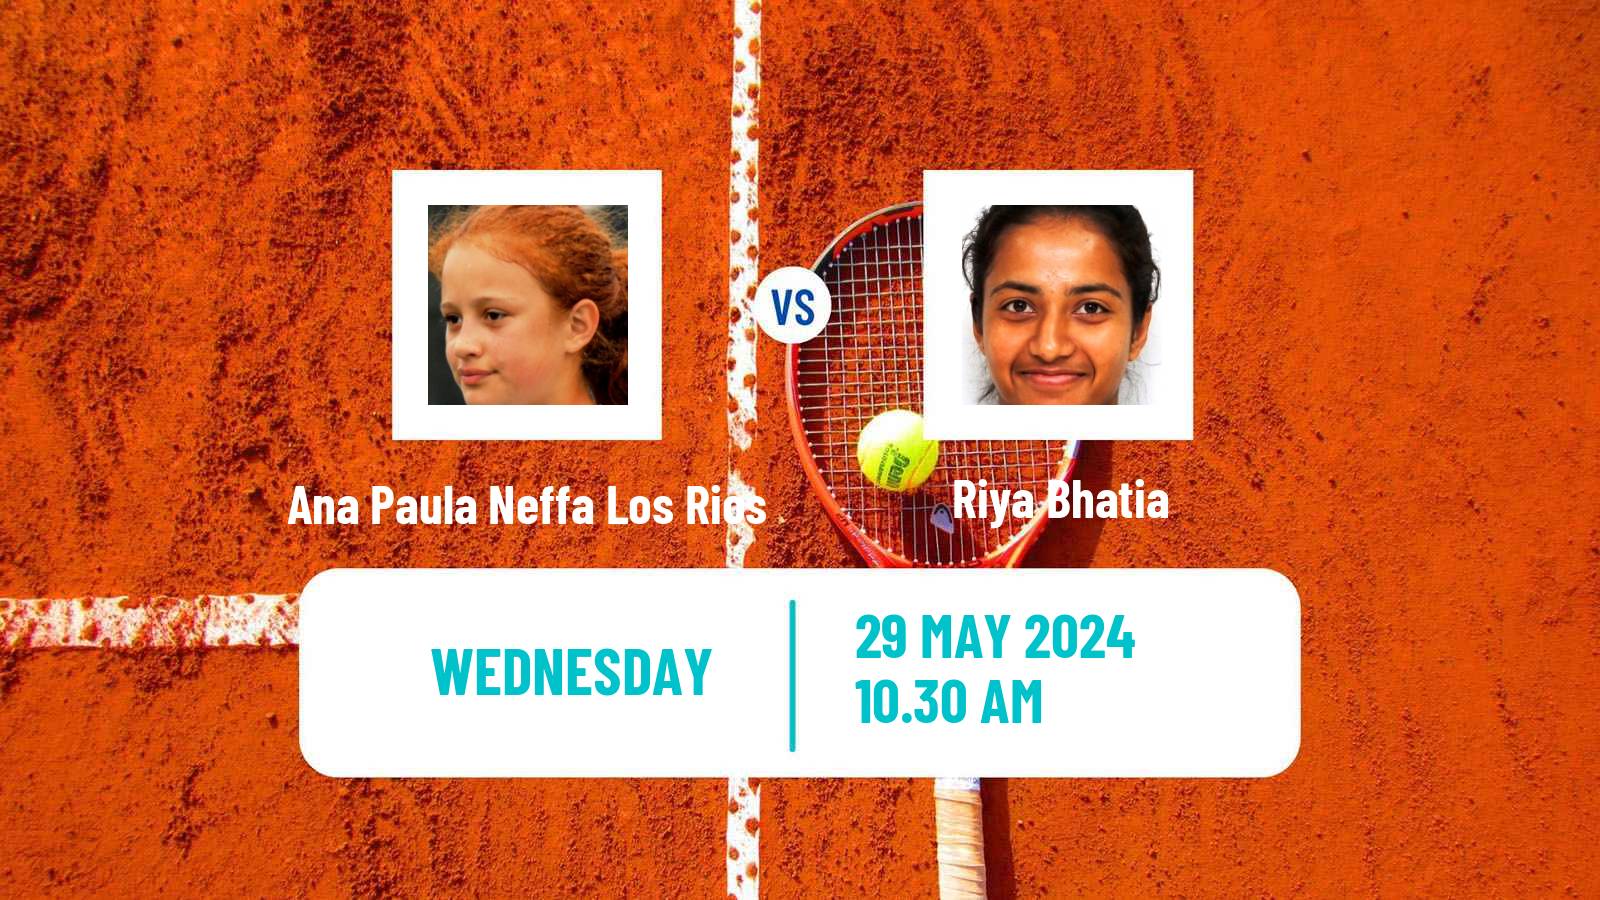 Tennis ITF W35 Santo Domingo 4 Women Ana Paula Neffa Los Rios - Riya Bhatia